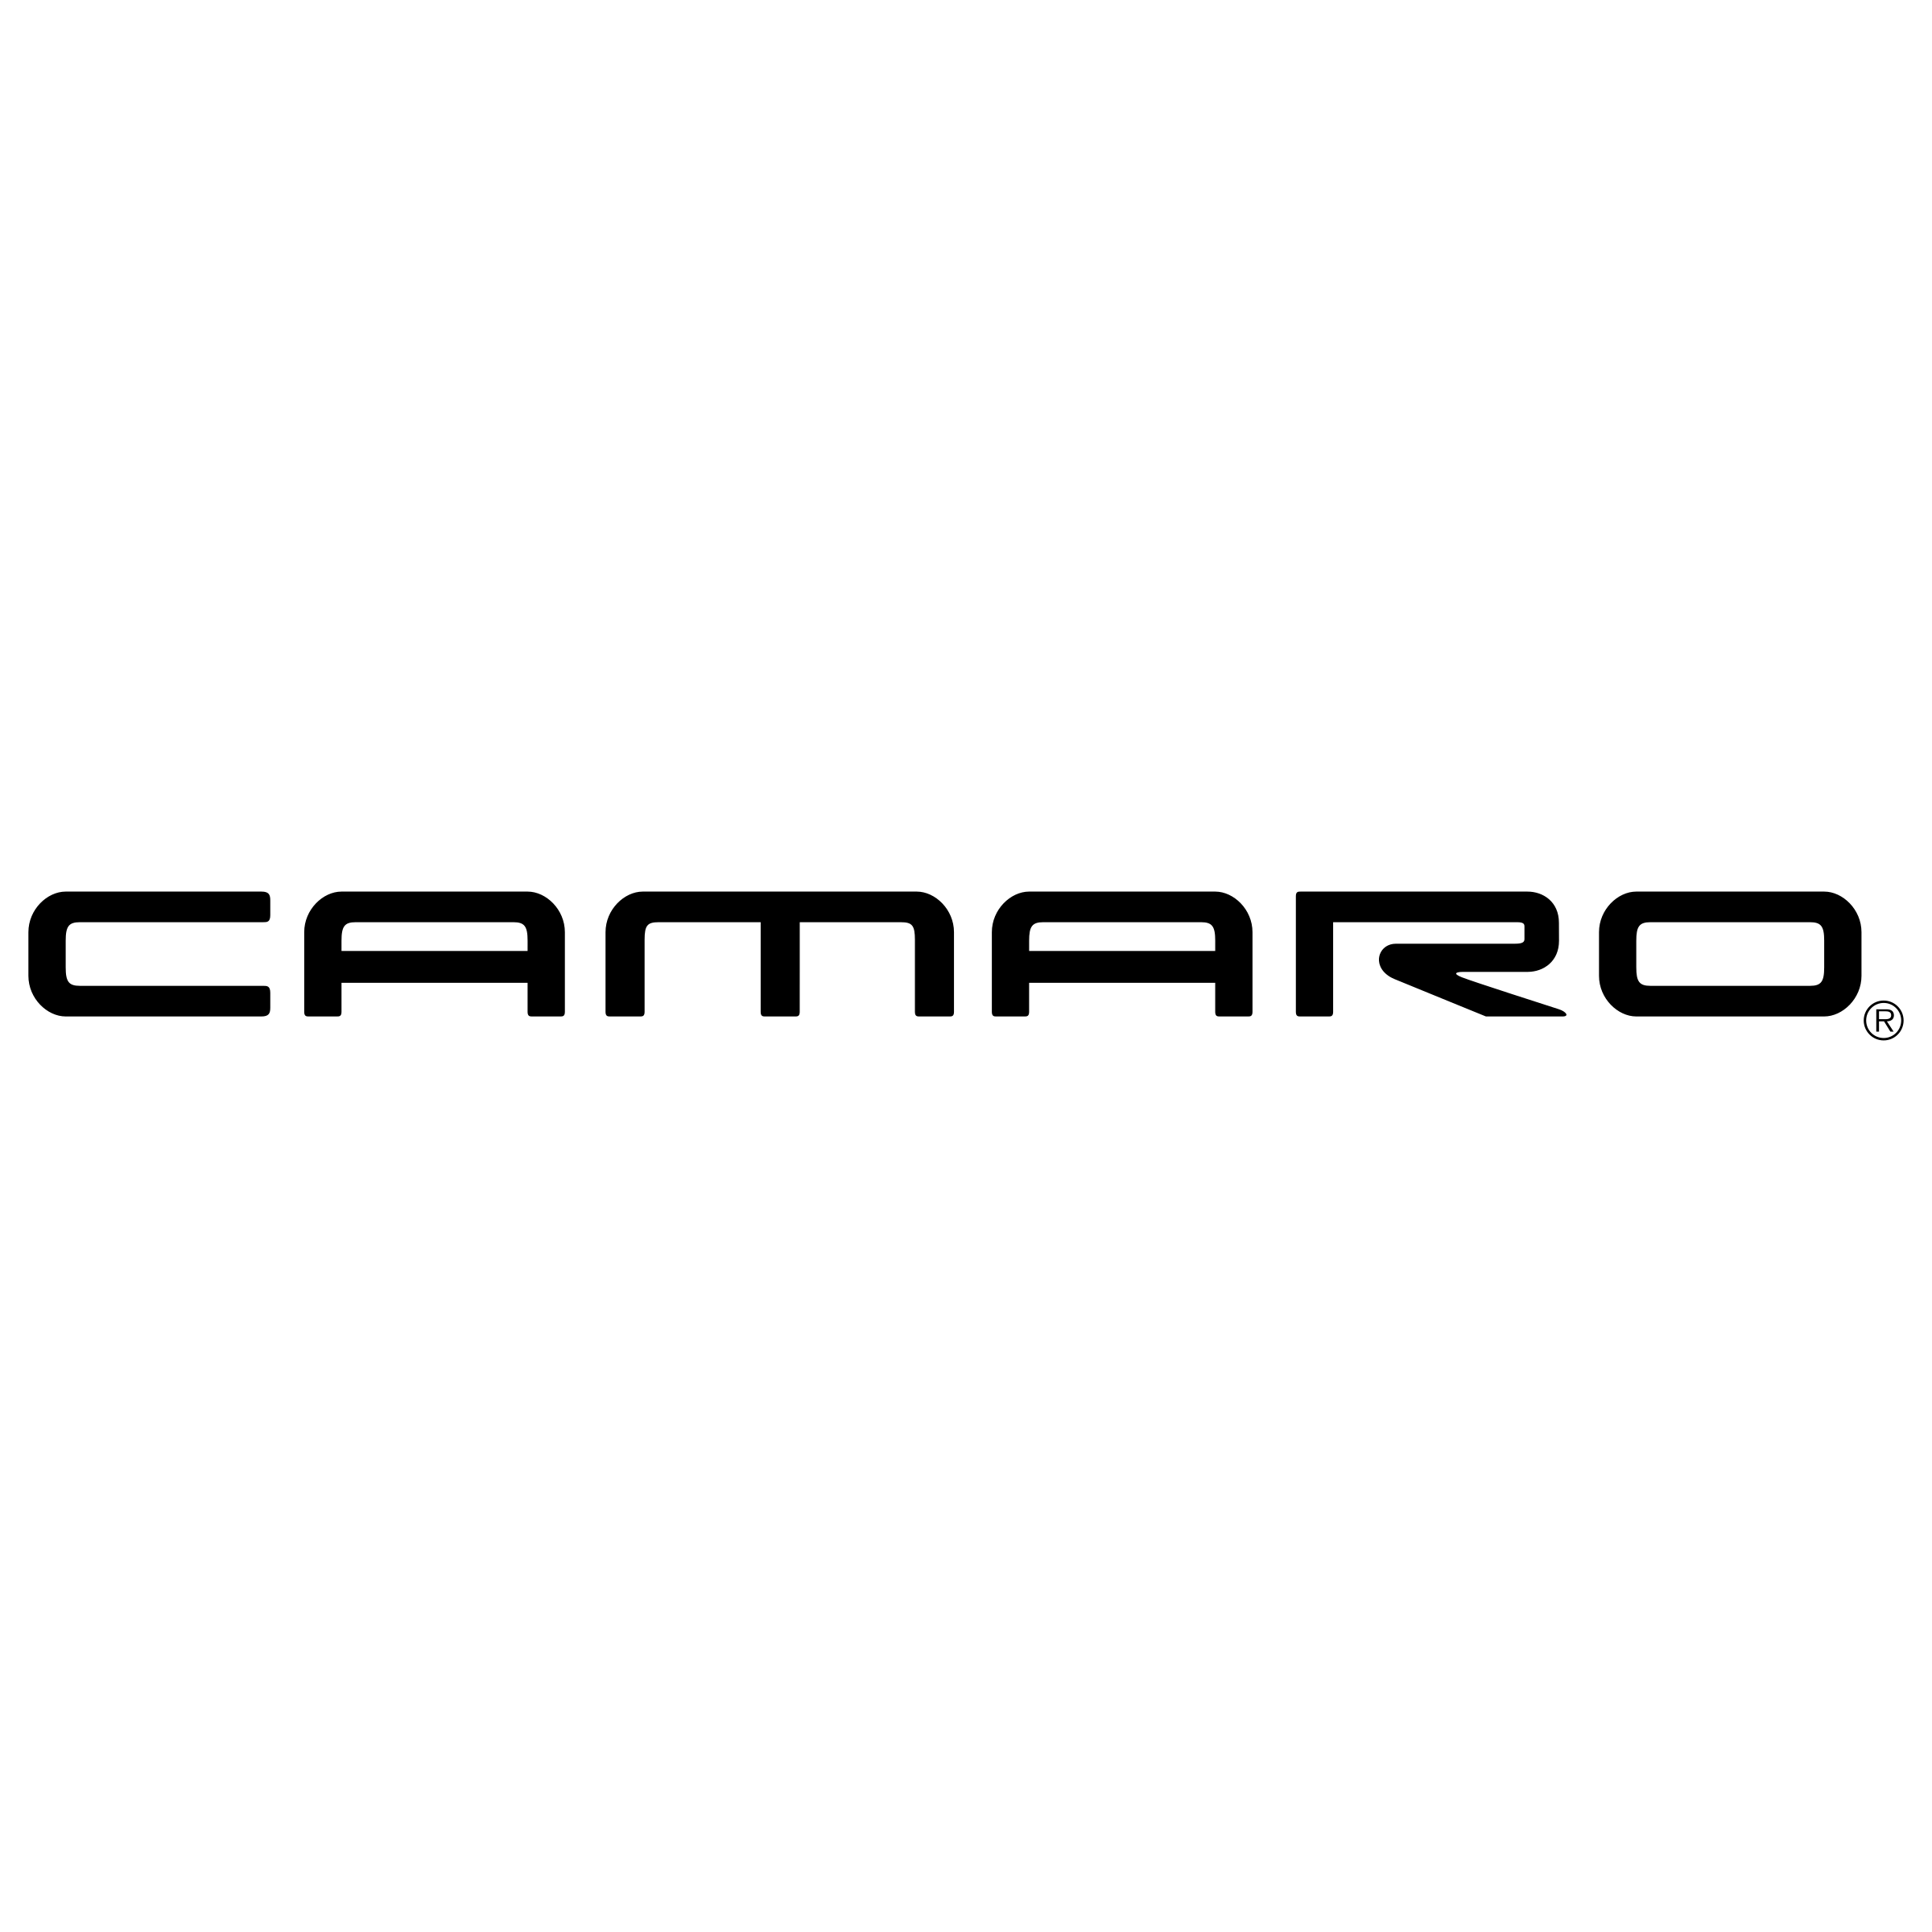 Cammaro Logo - Camaro Logo PNG Transparent & SVG Vector - Freebie Supply